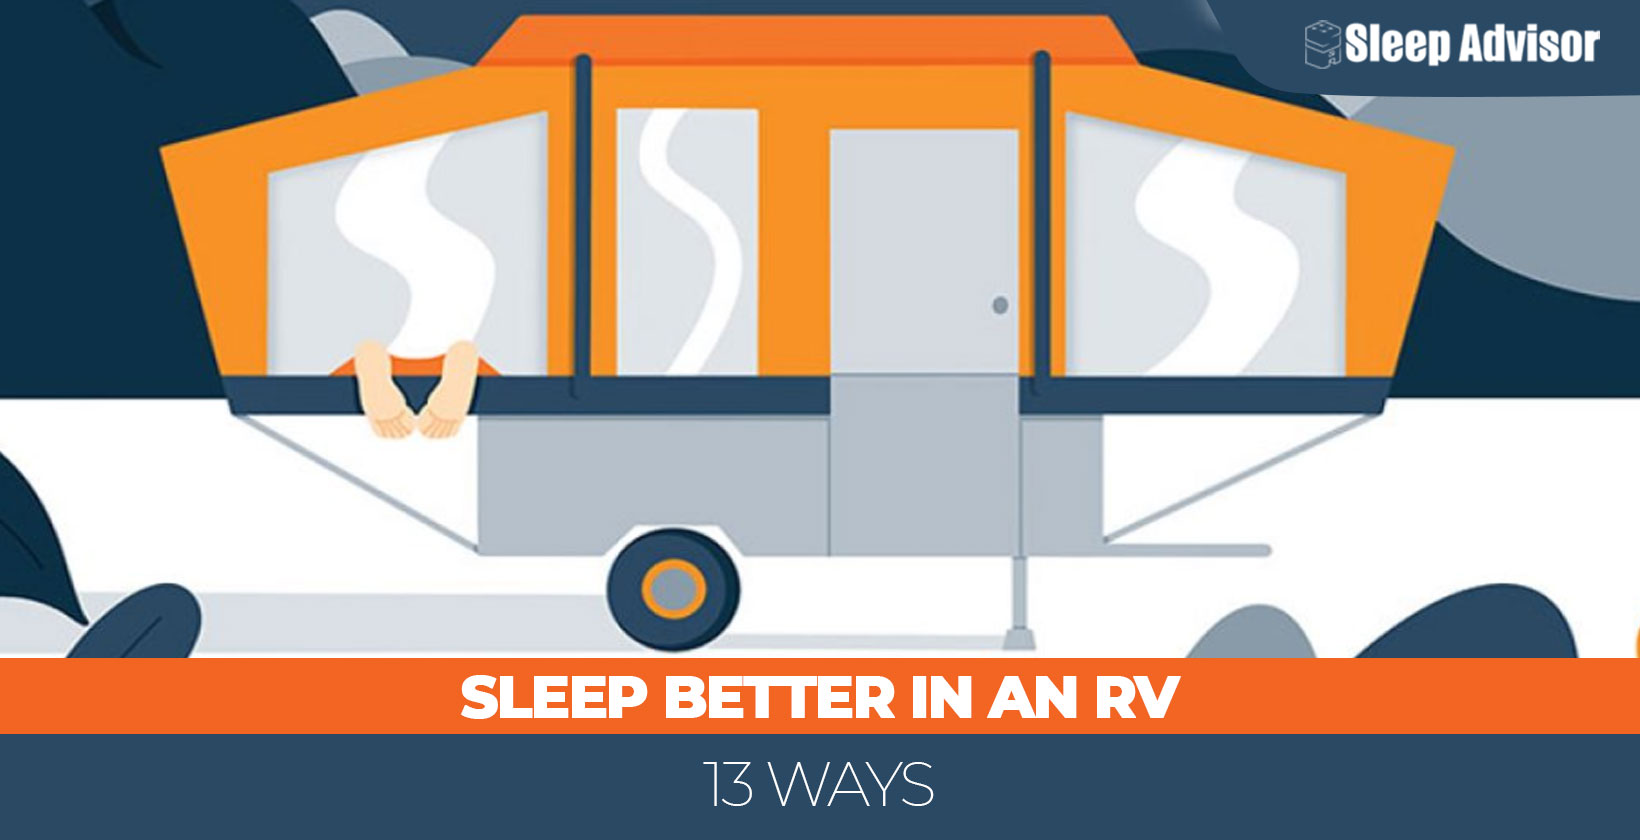 13 Ways to Sleep Better in an RV 1640x840px